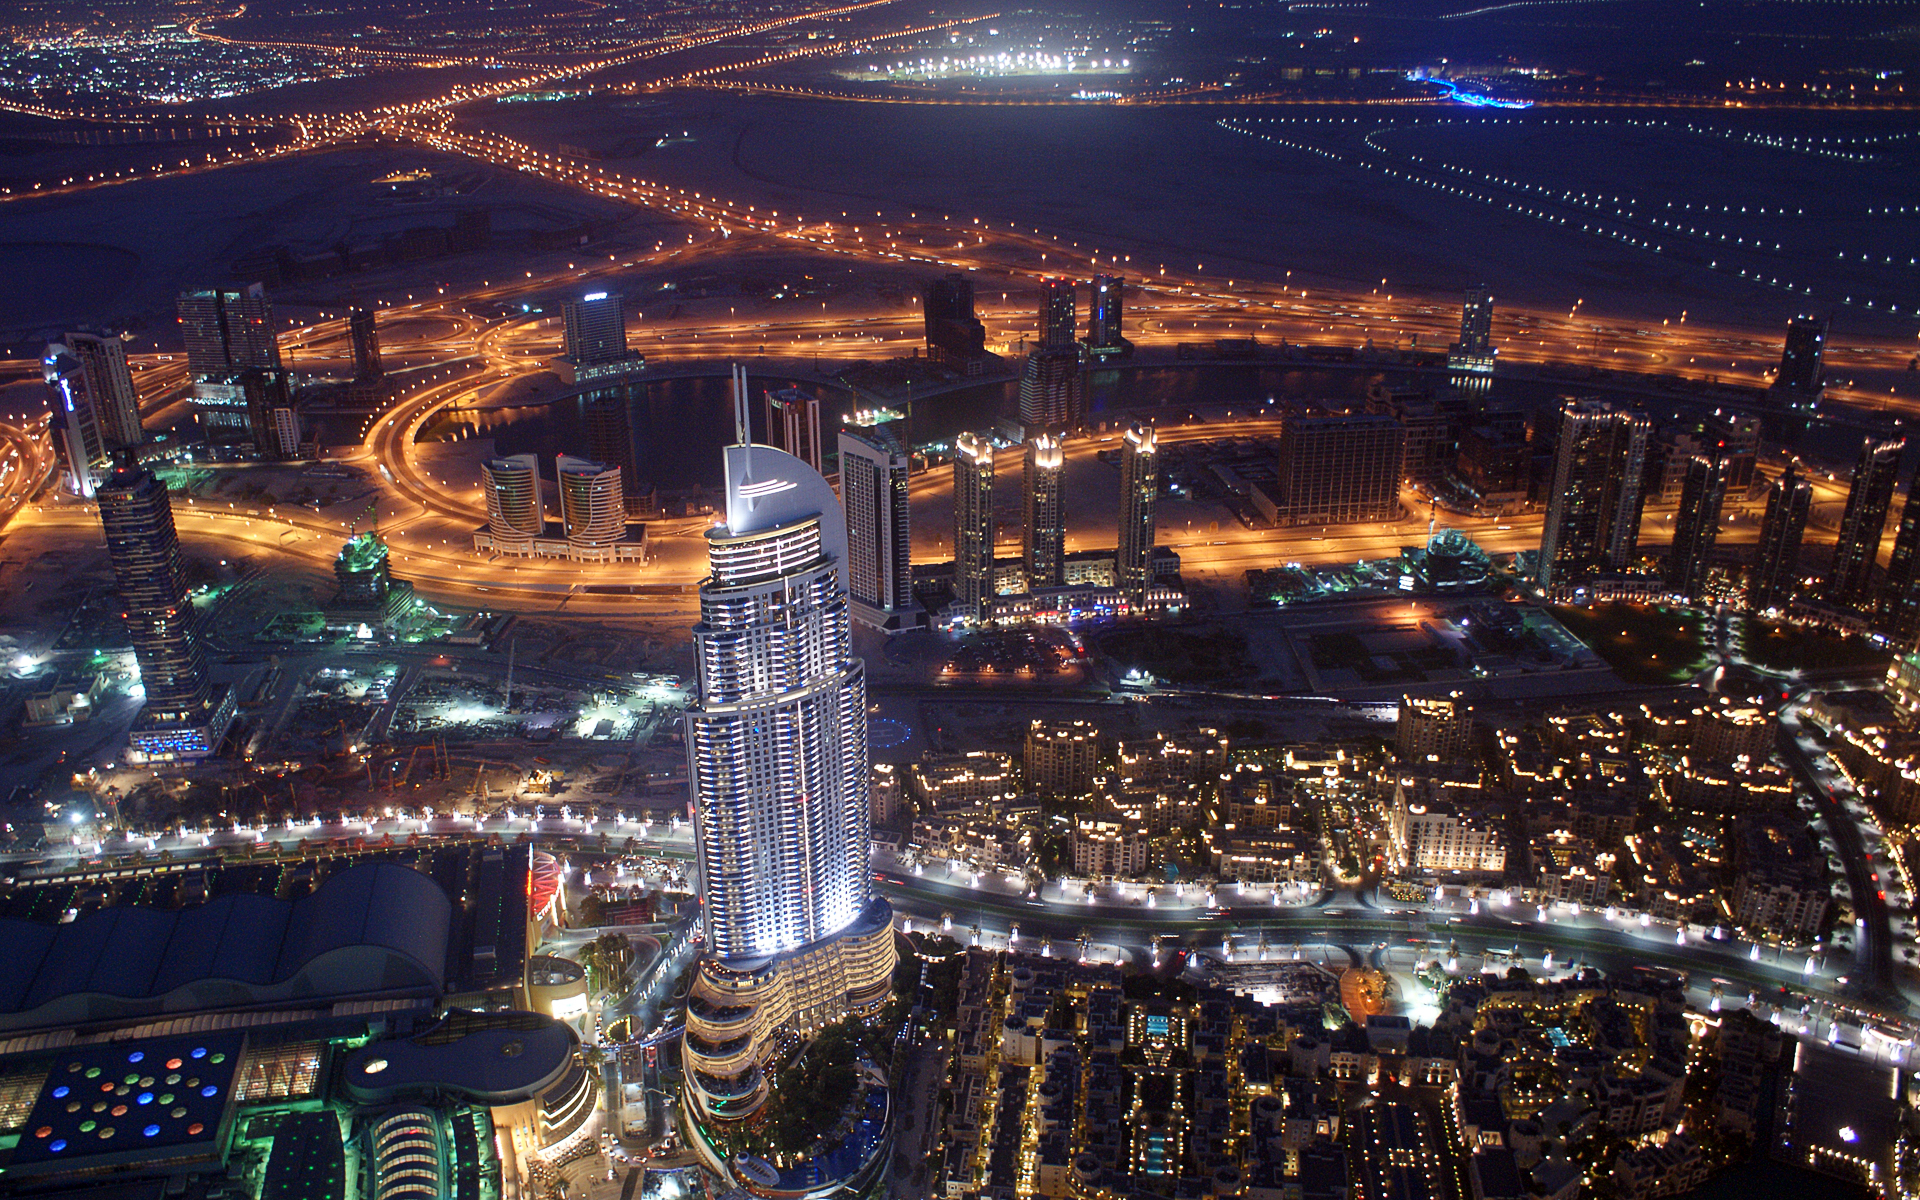 Dubai At Night (Burj Khalifa) Wallpaper Edition by skywalkerdesign on  DeviantArt